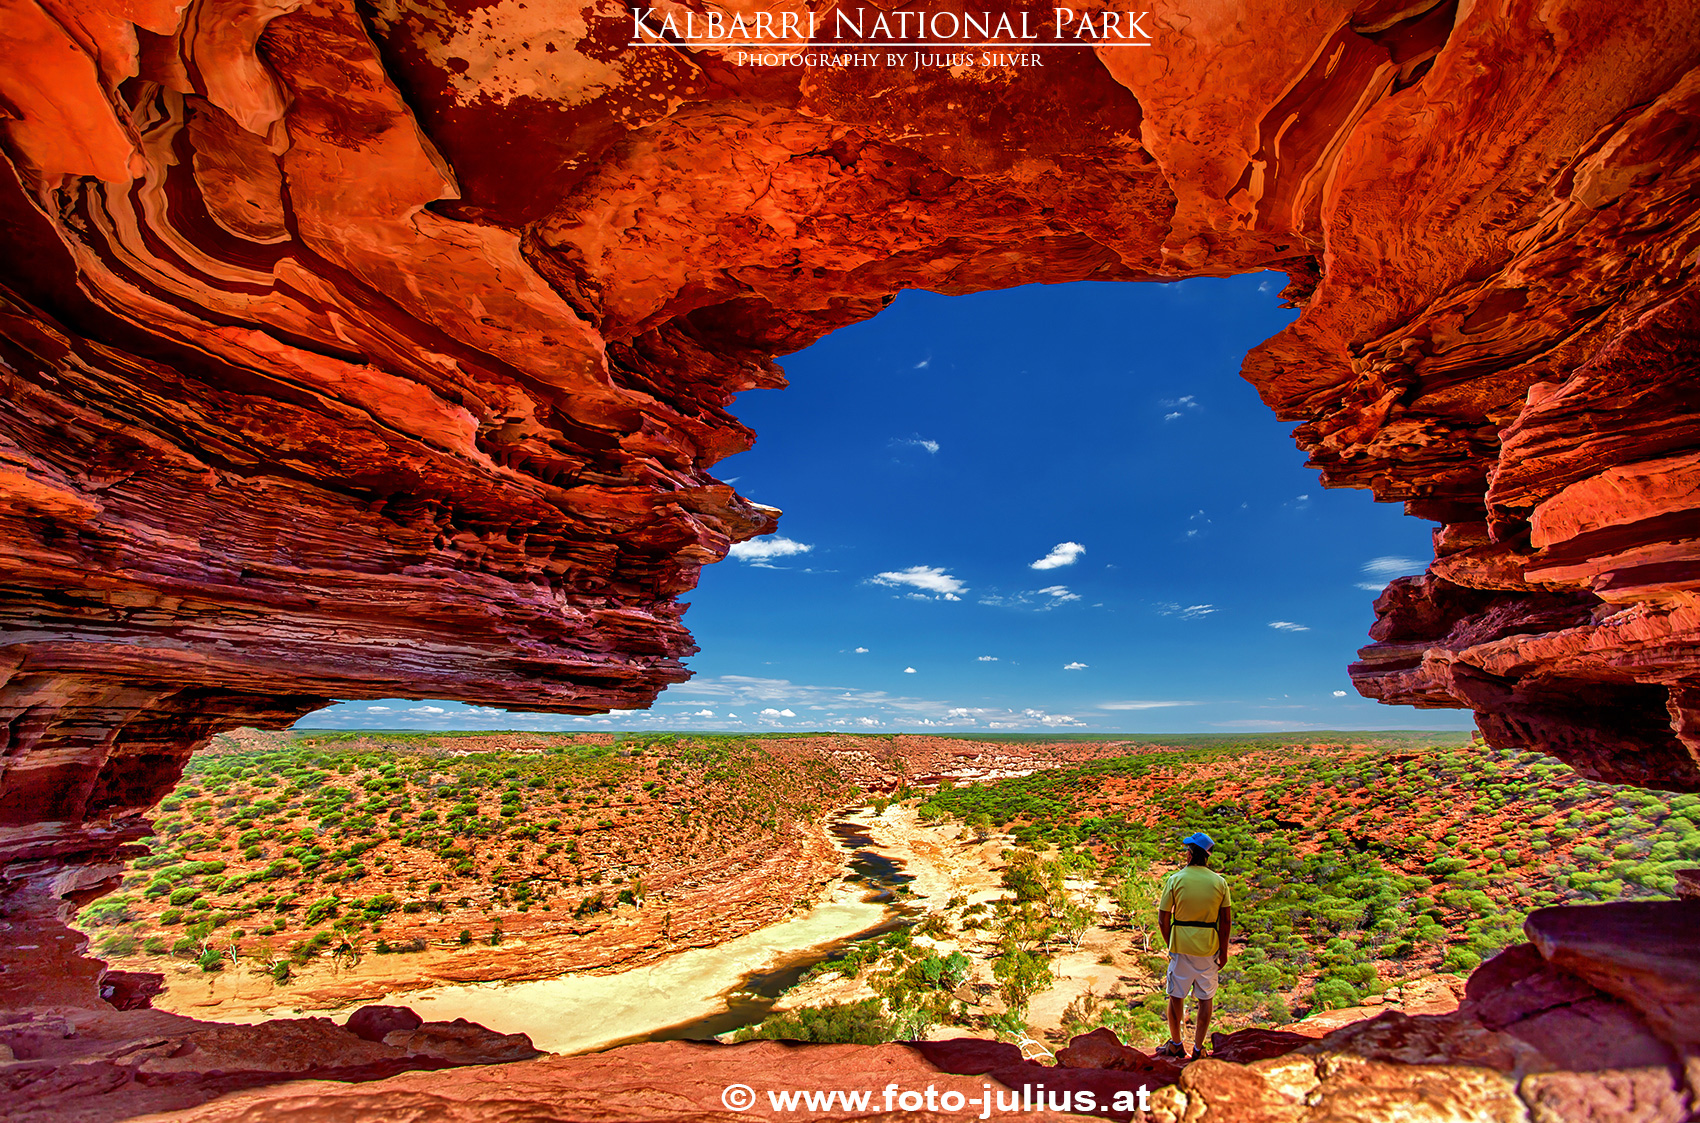 Australia_167a_Kalbarri_National_Park.jpg, 1,5MB